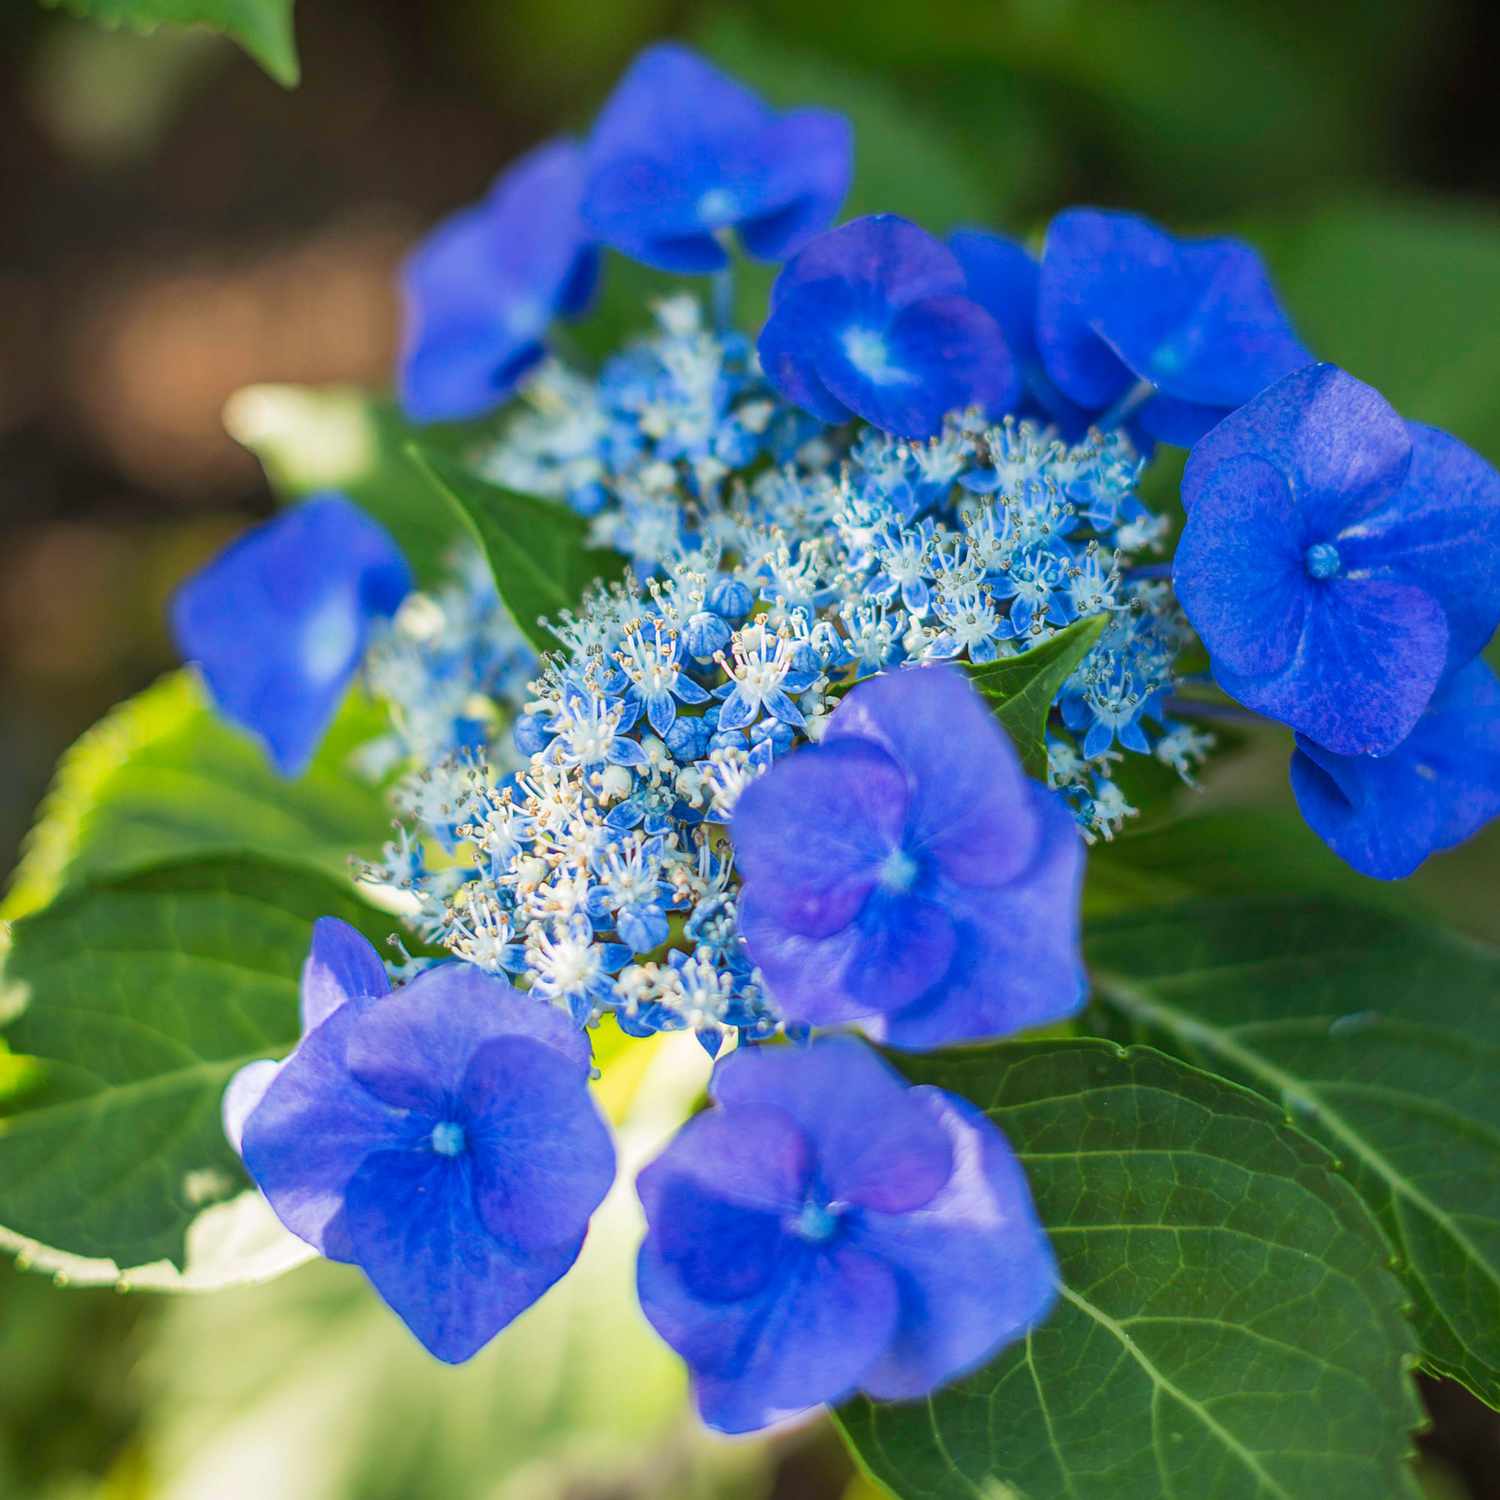 Image of Blue cassel hydrangea flower close-up